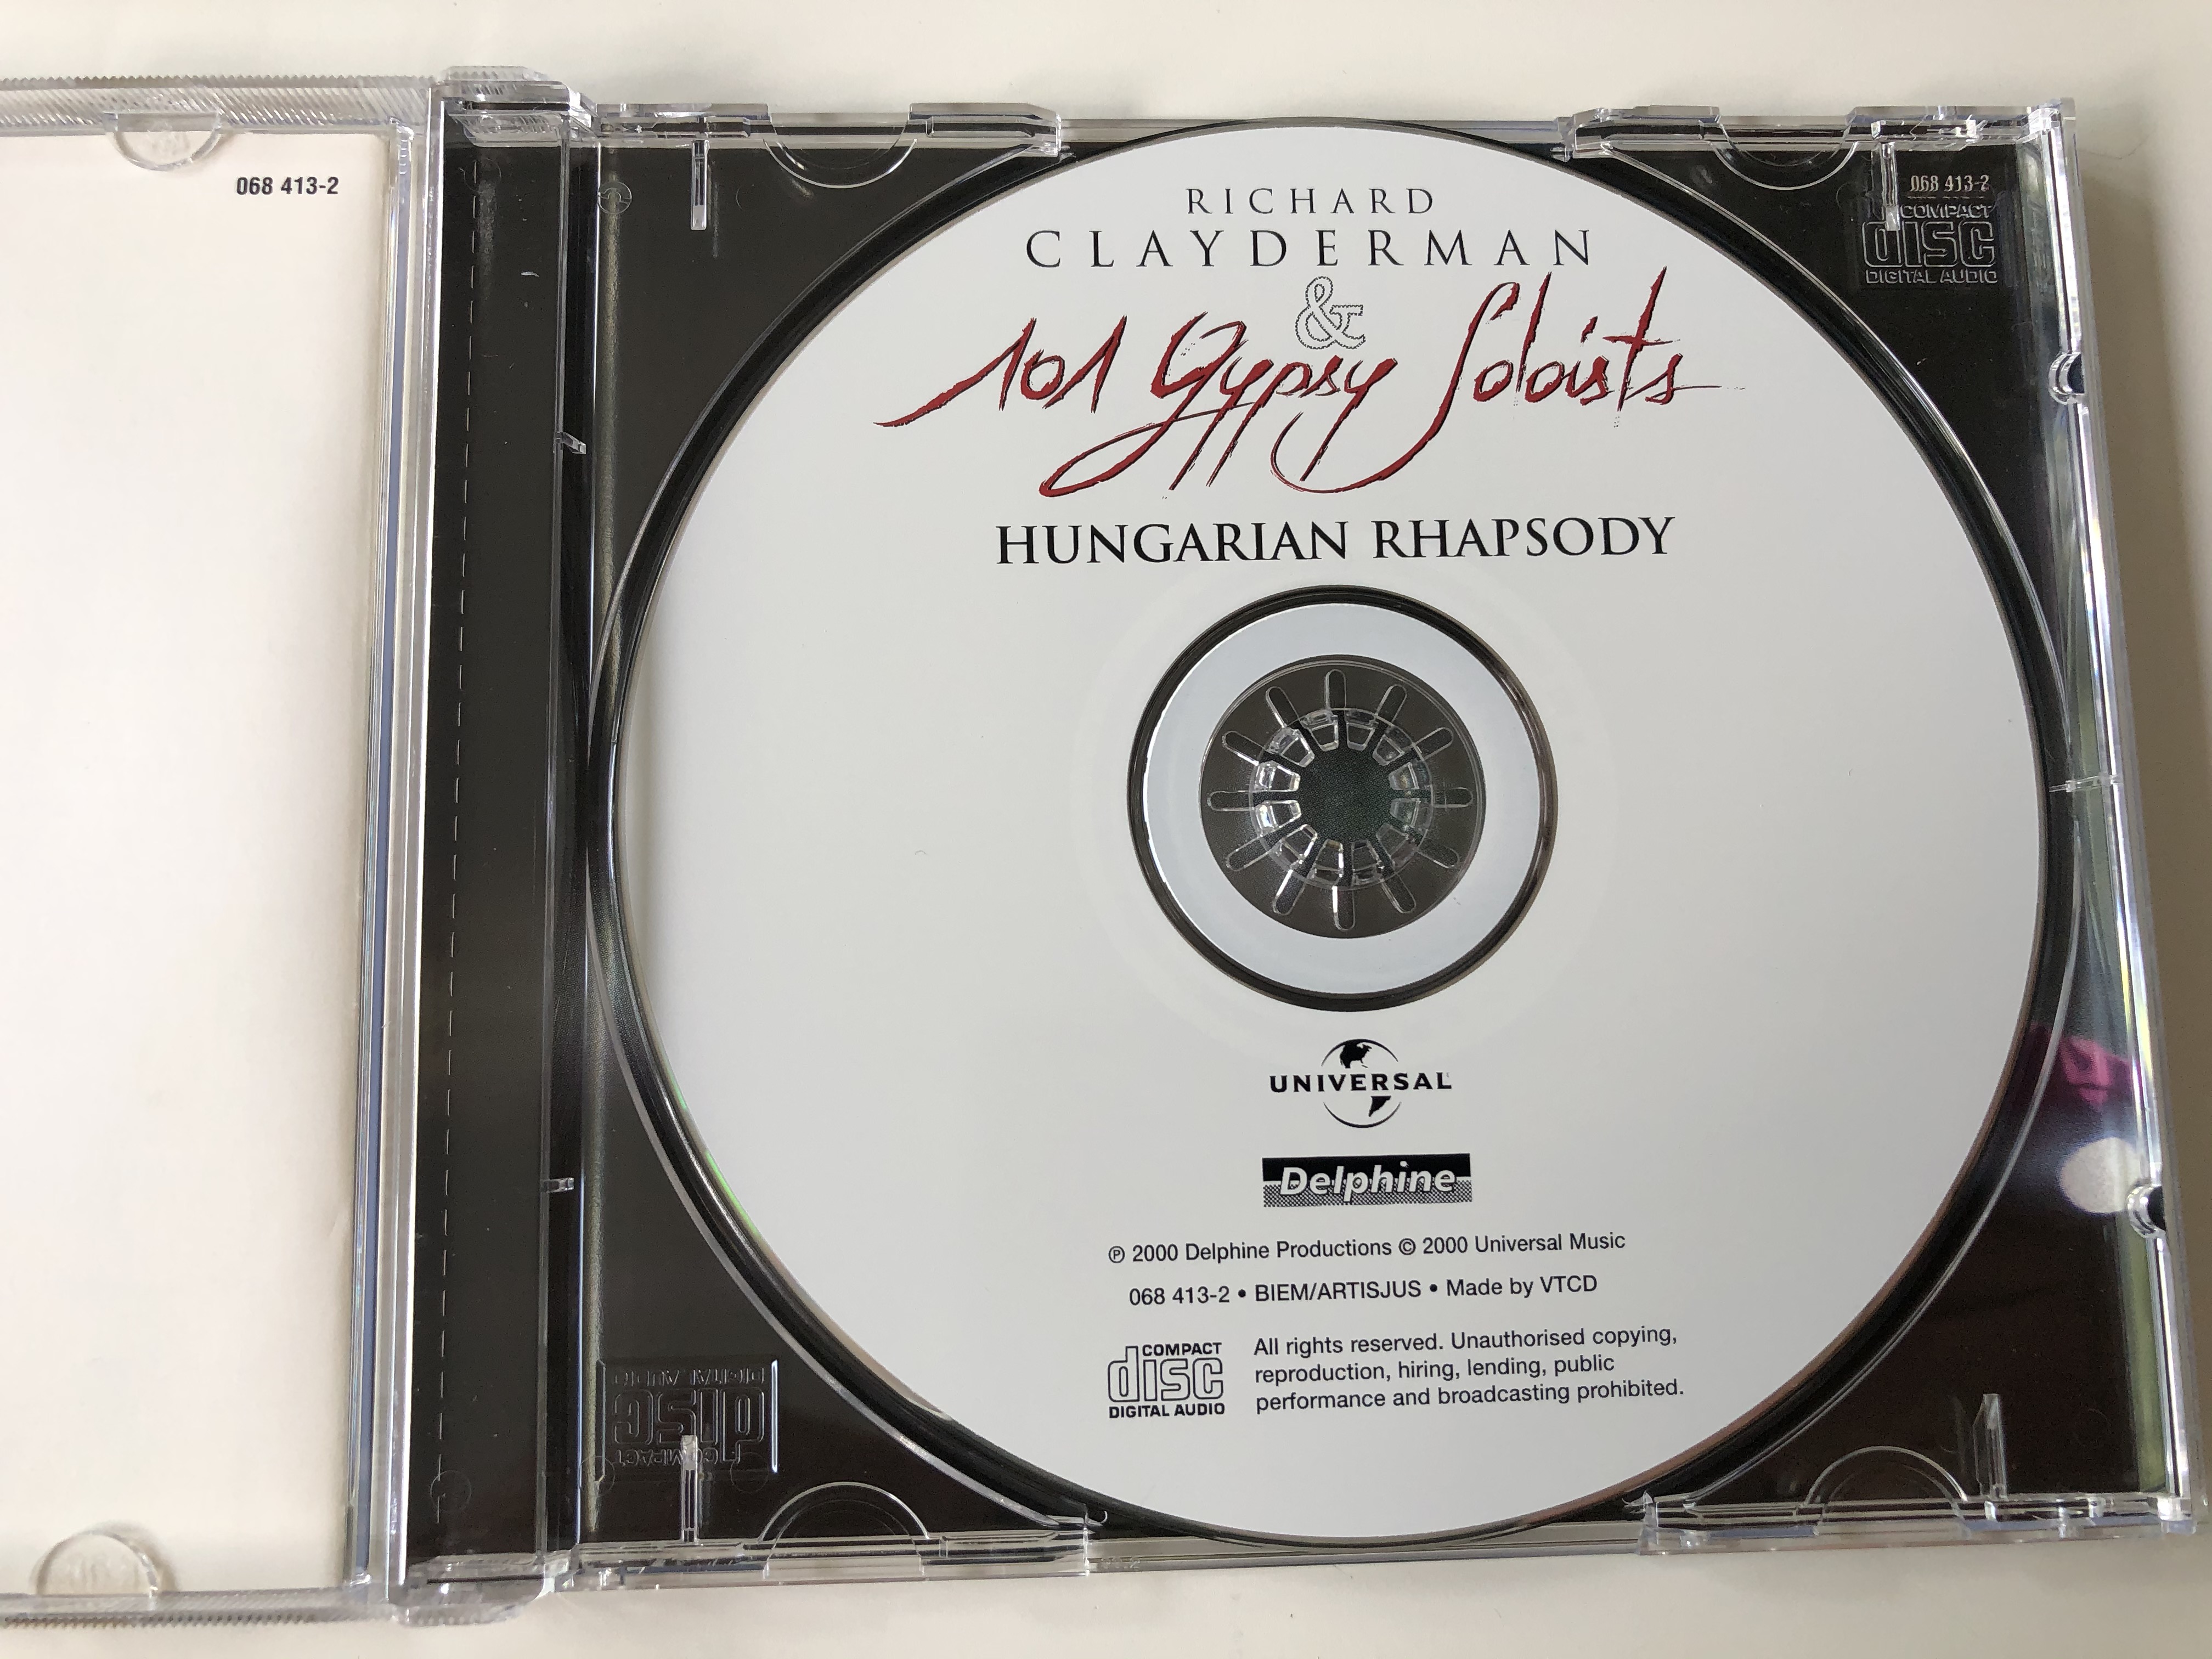 richard-clayderman-101-gypsy-soloists-hungarian-rhapsody-delphine-audio-cd-2000-068-413-2-4-.jpg